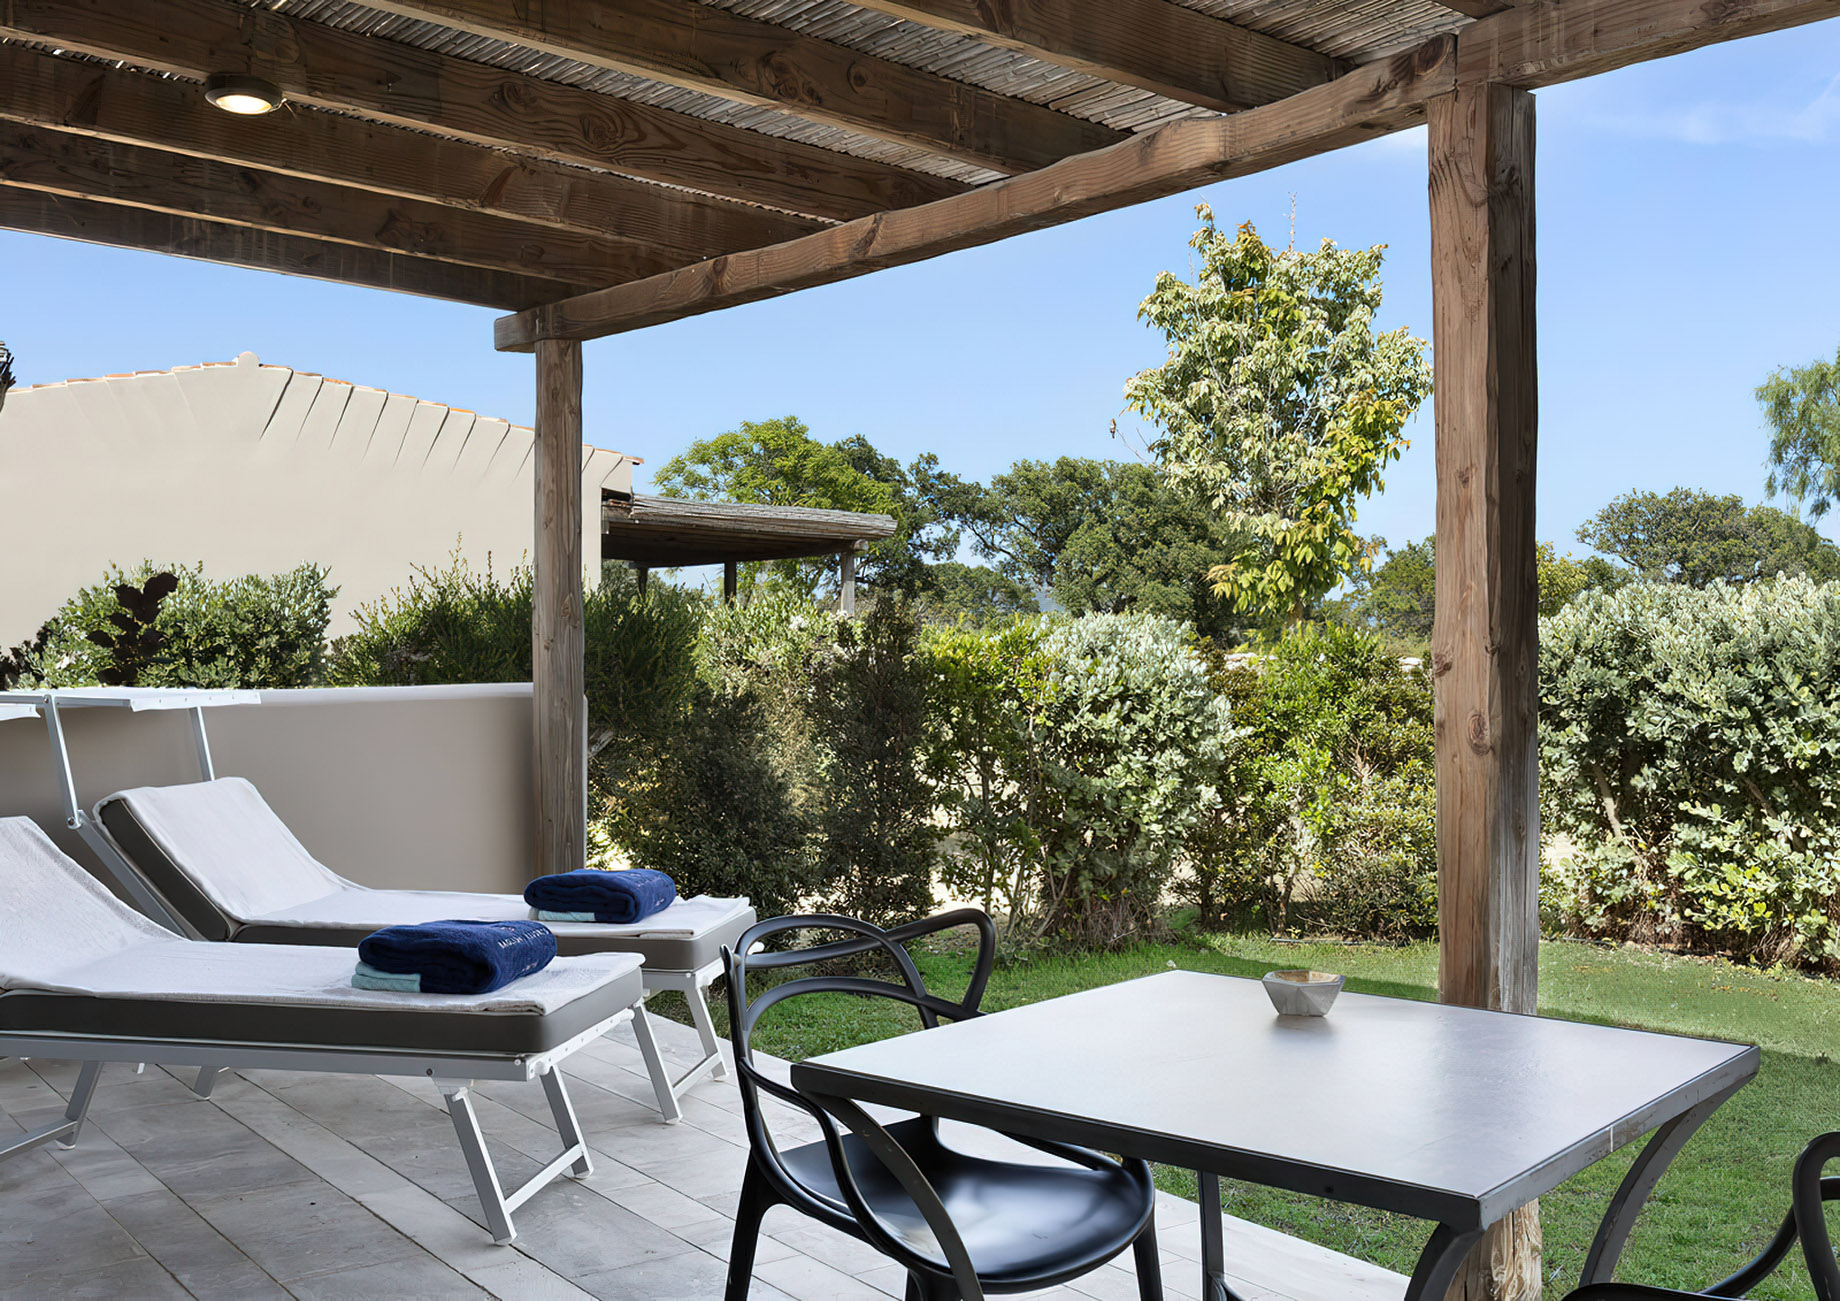 Baglioni Resort Sardinia – San Teodoro, Sardegna, Italy – Garden Suite Deck